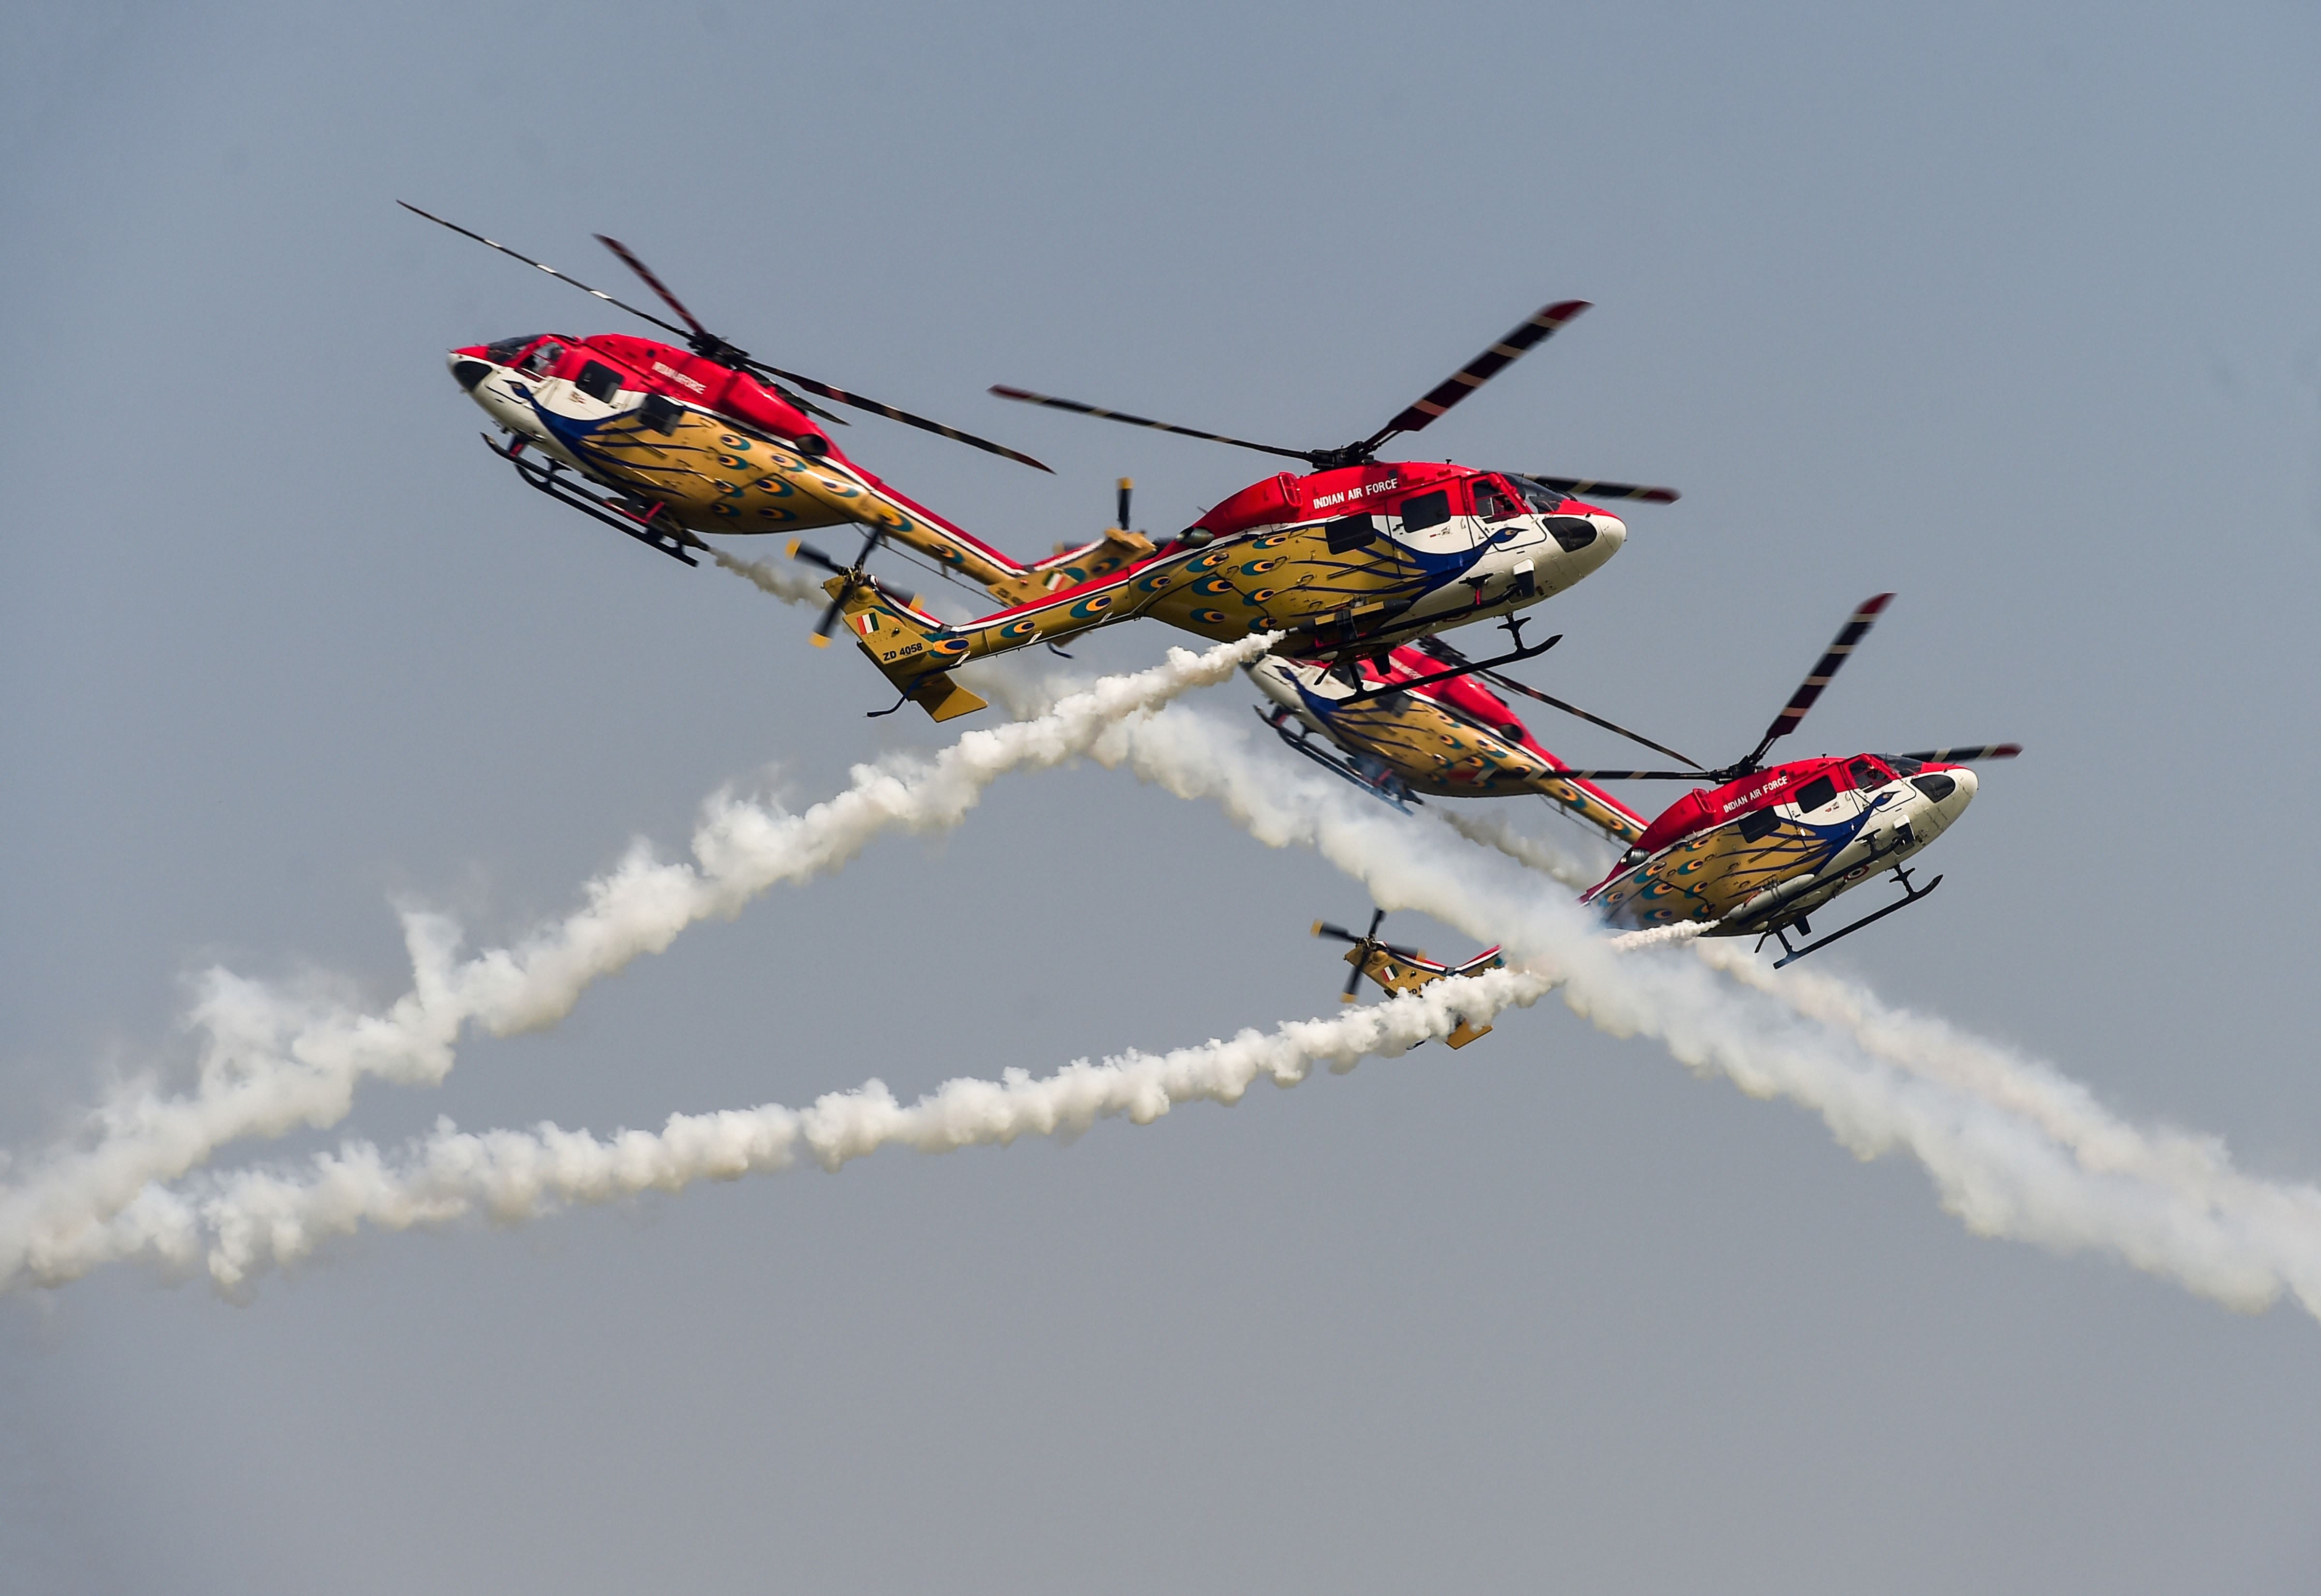 IAF's aerobatic team 'Sarang' perform during an air display